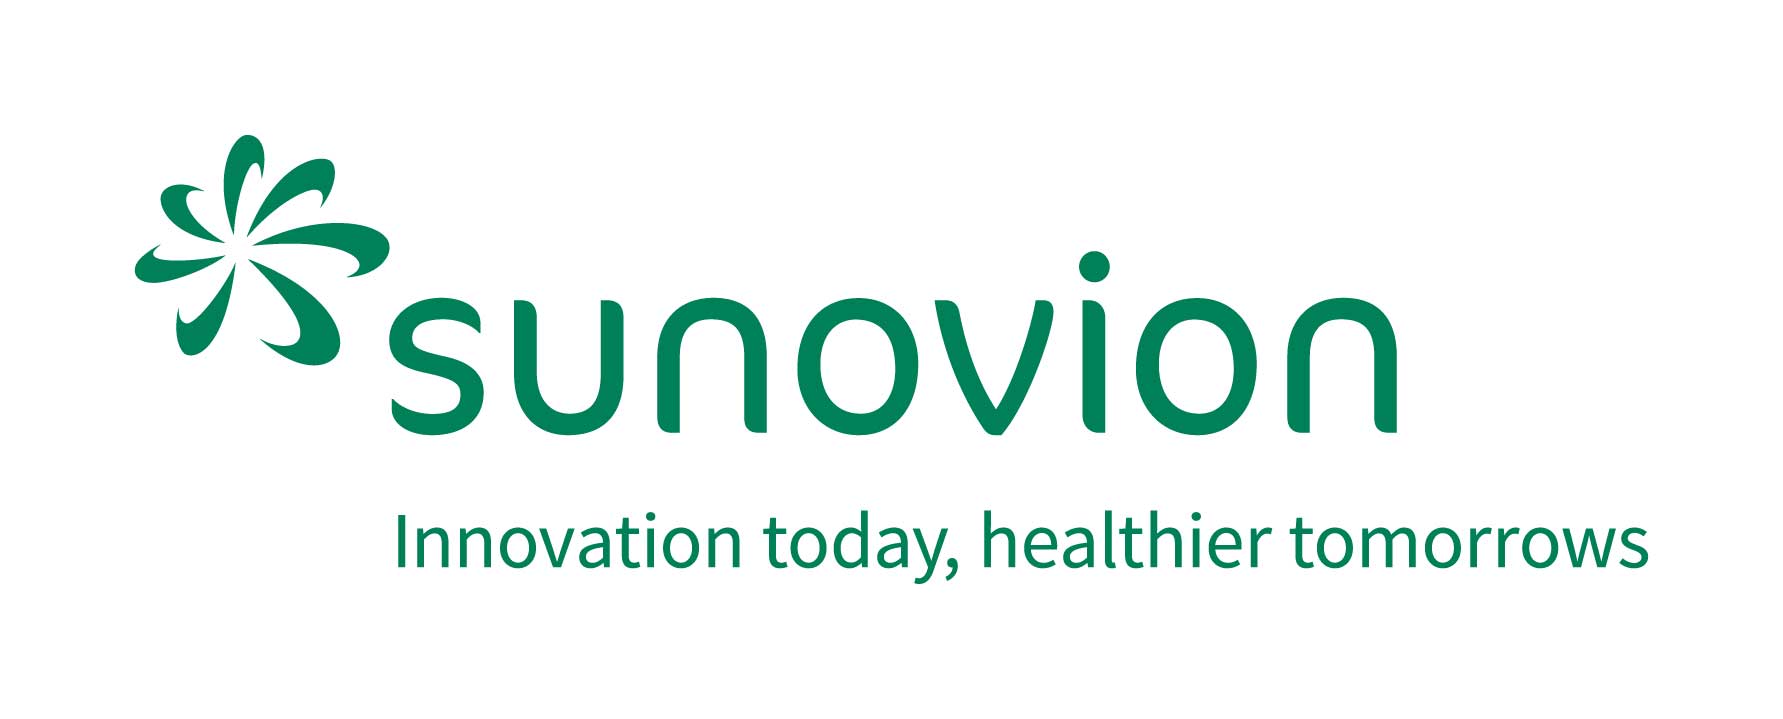 Sunovion Logo - Sunovion logo including Tagline